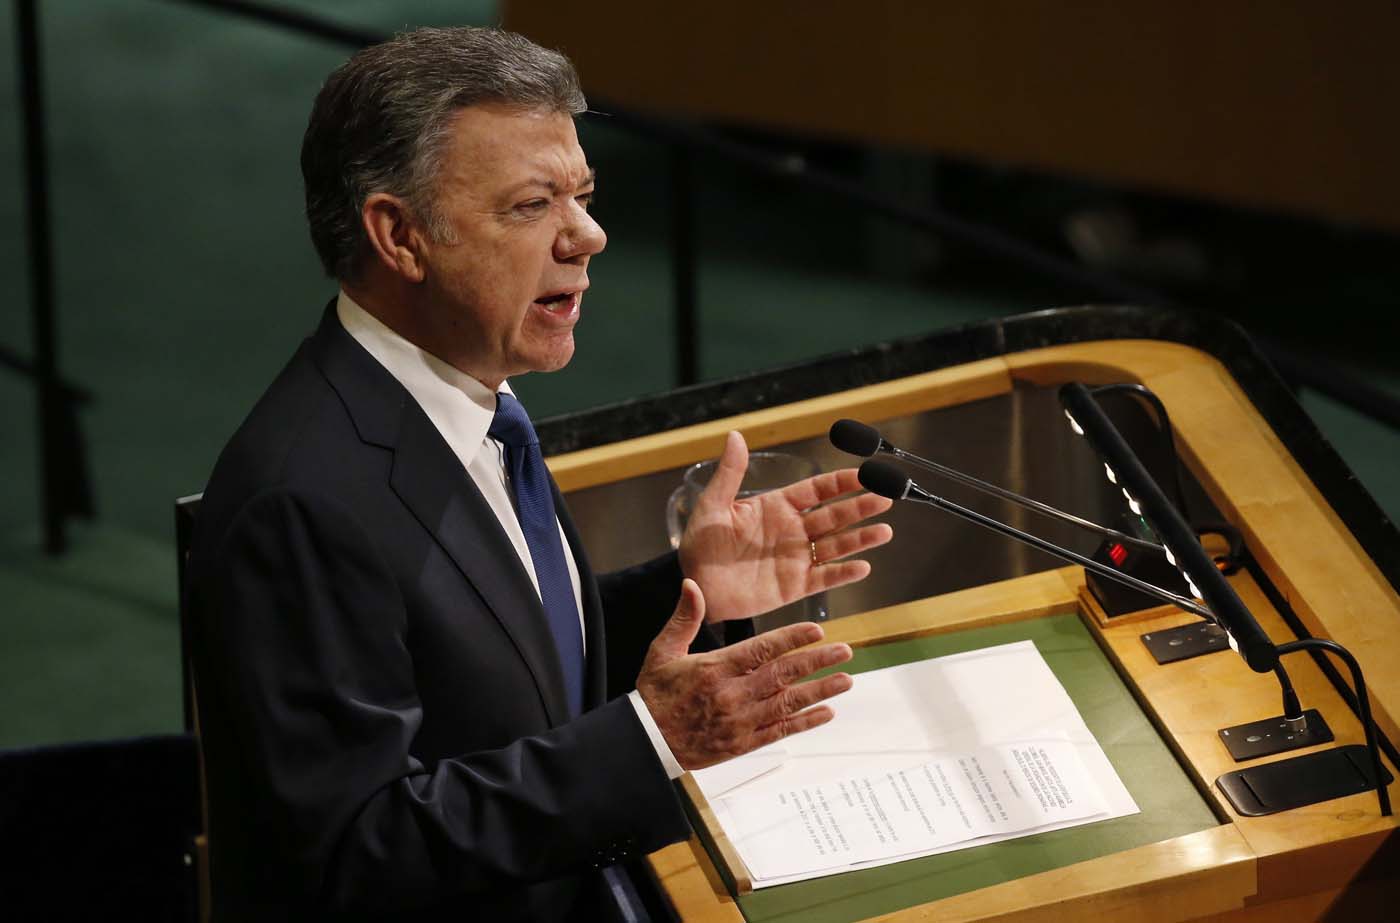 Colombian President Juan Manuel Santos Calderon addresses the 72nd United Nations General Assembly at U.N. headquarters in New York, U.S., September 19, 2017. REUTERS/Shannon Stapleton